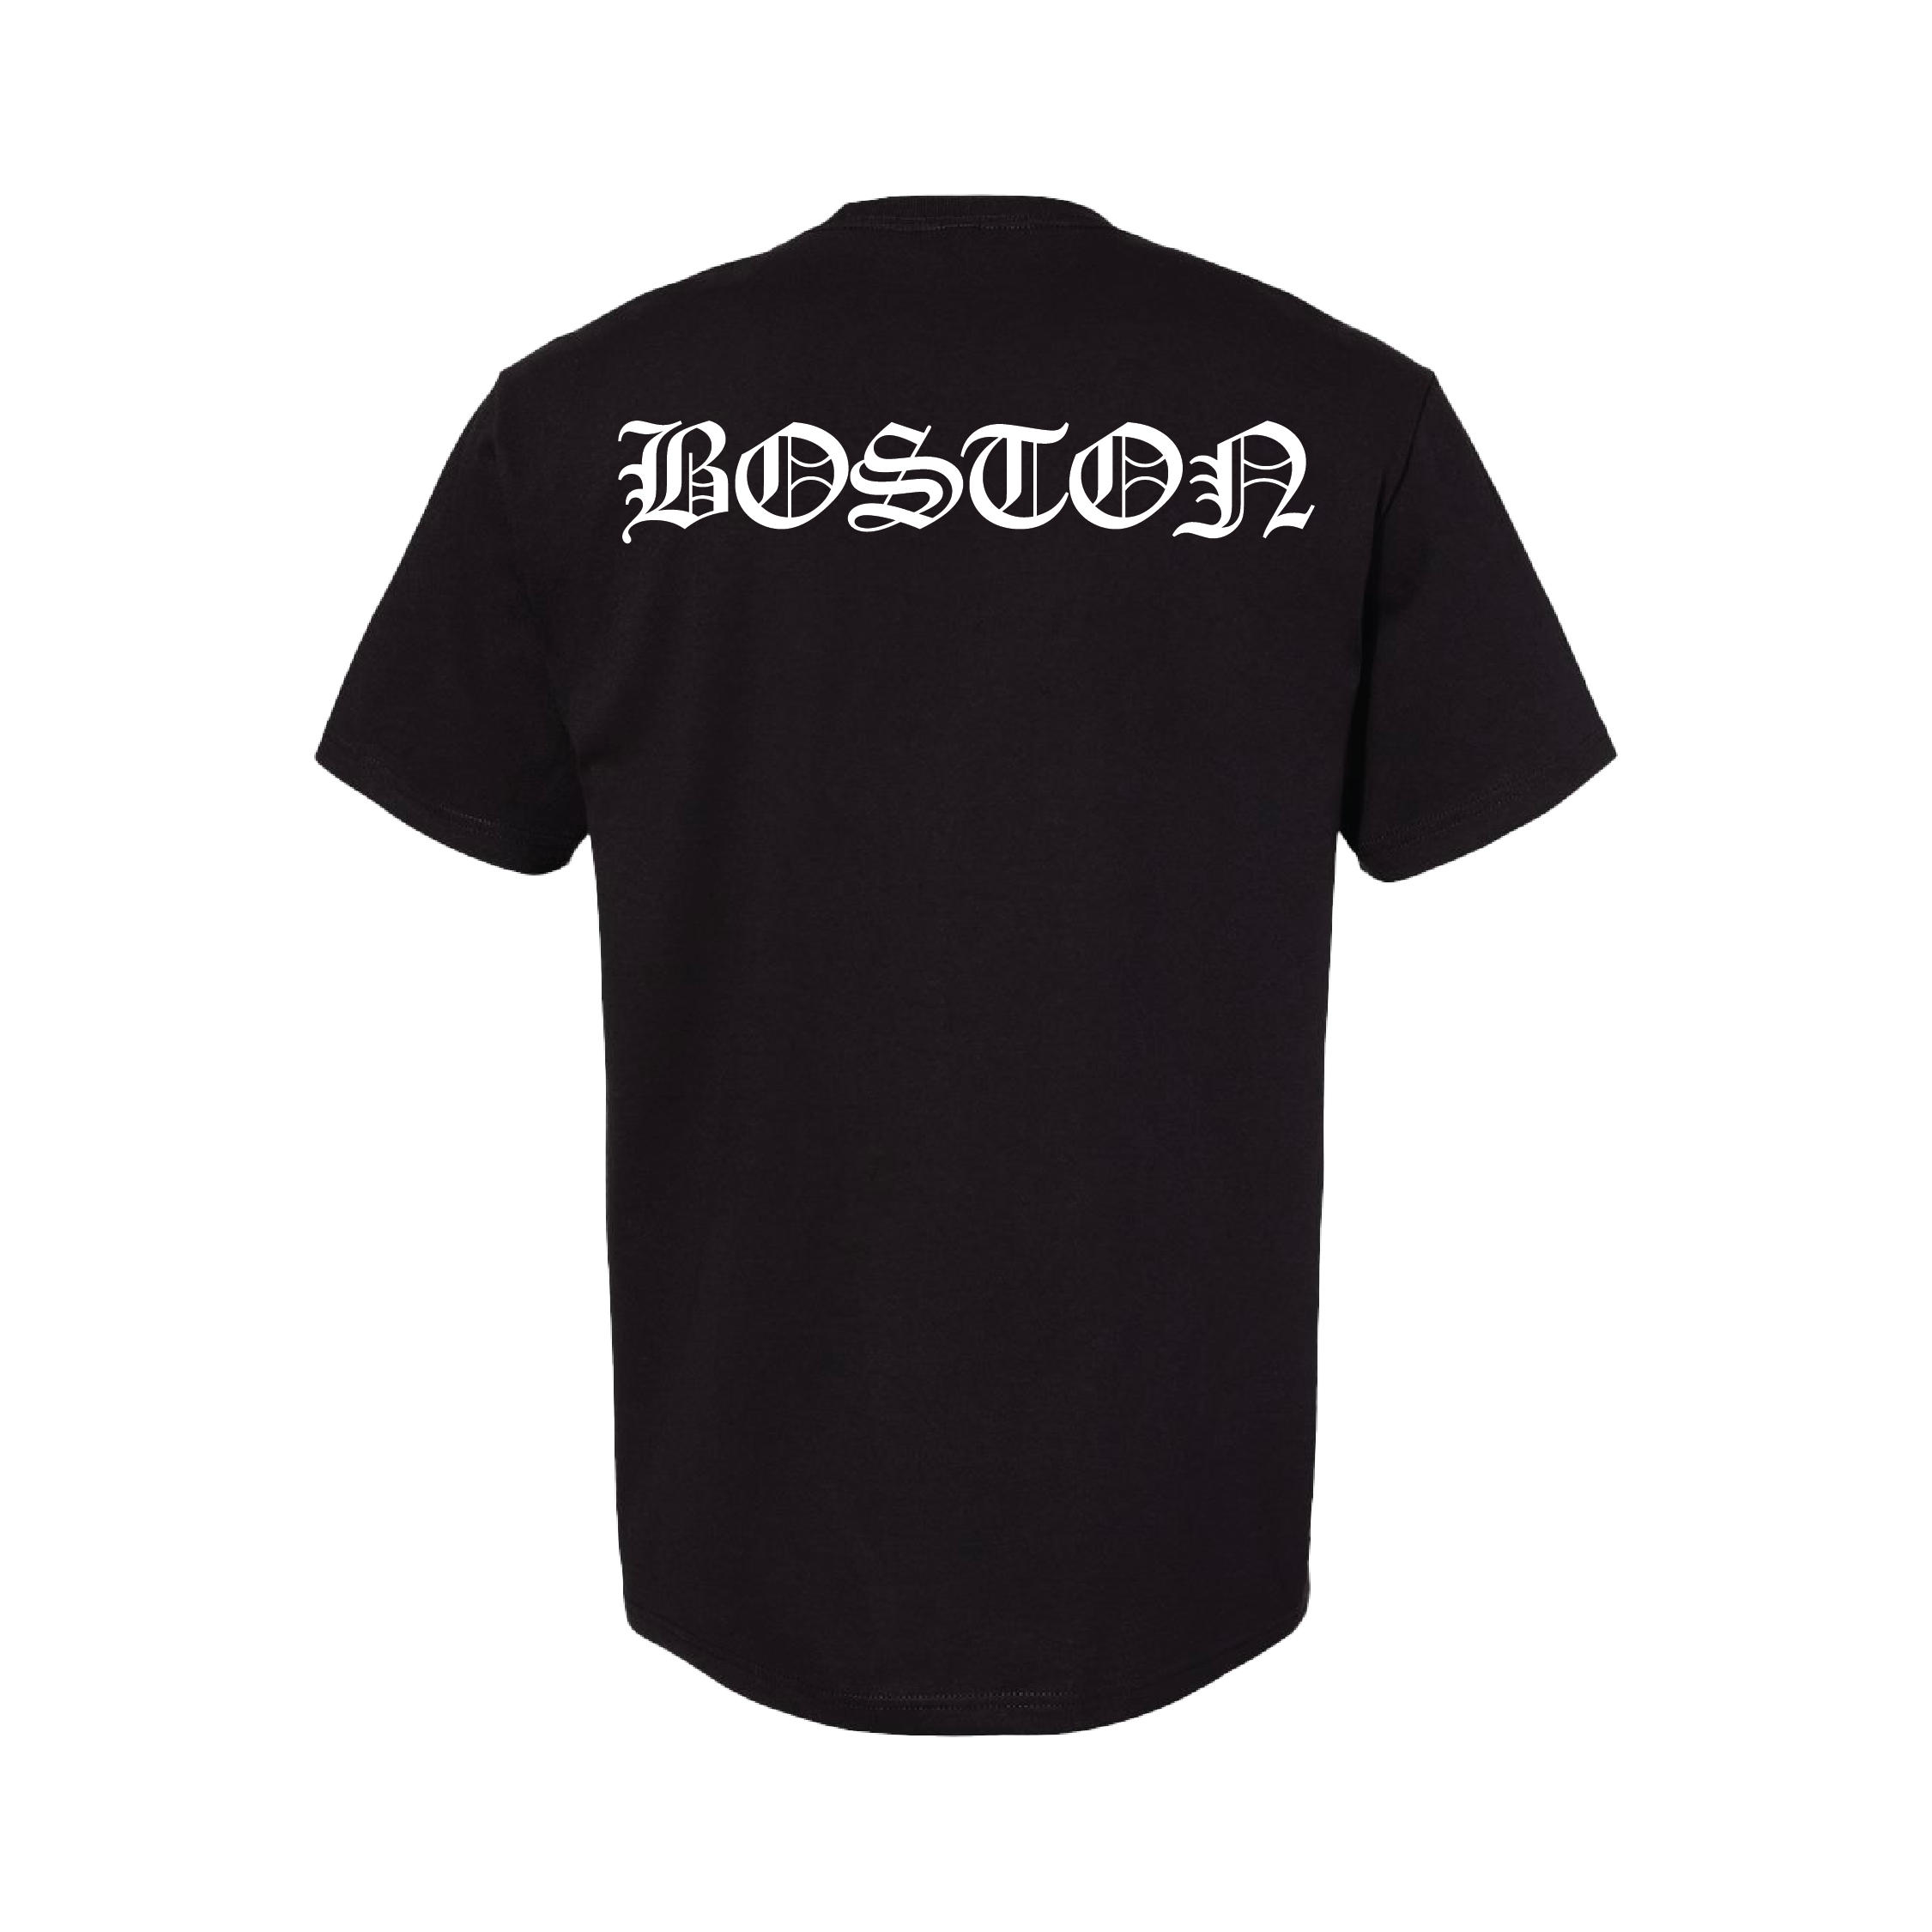 Black My Heart - Boston Old English Shirt